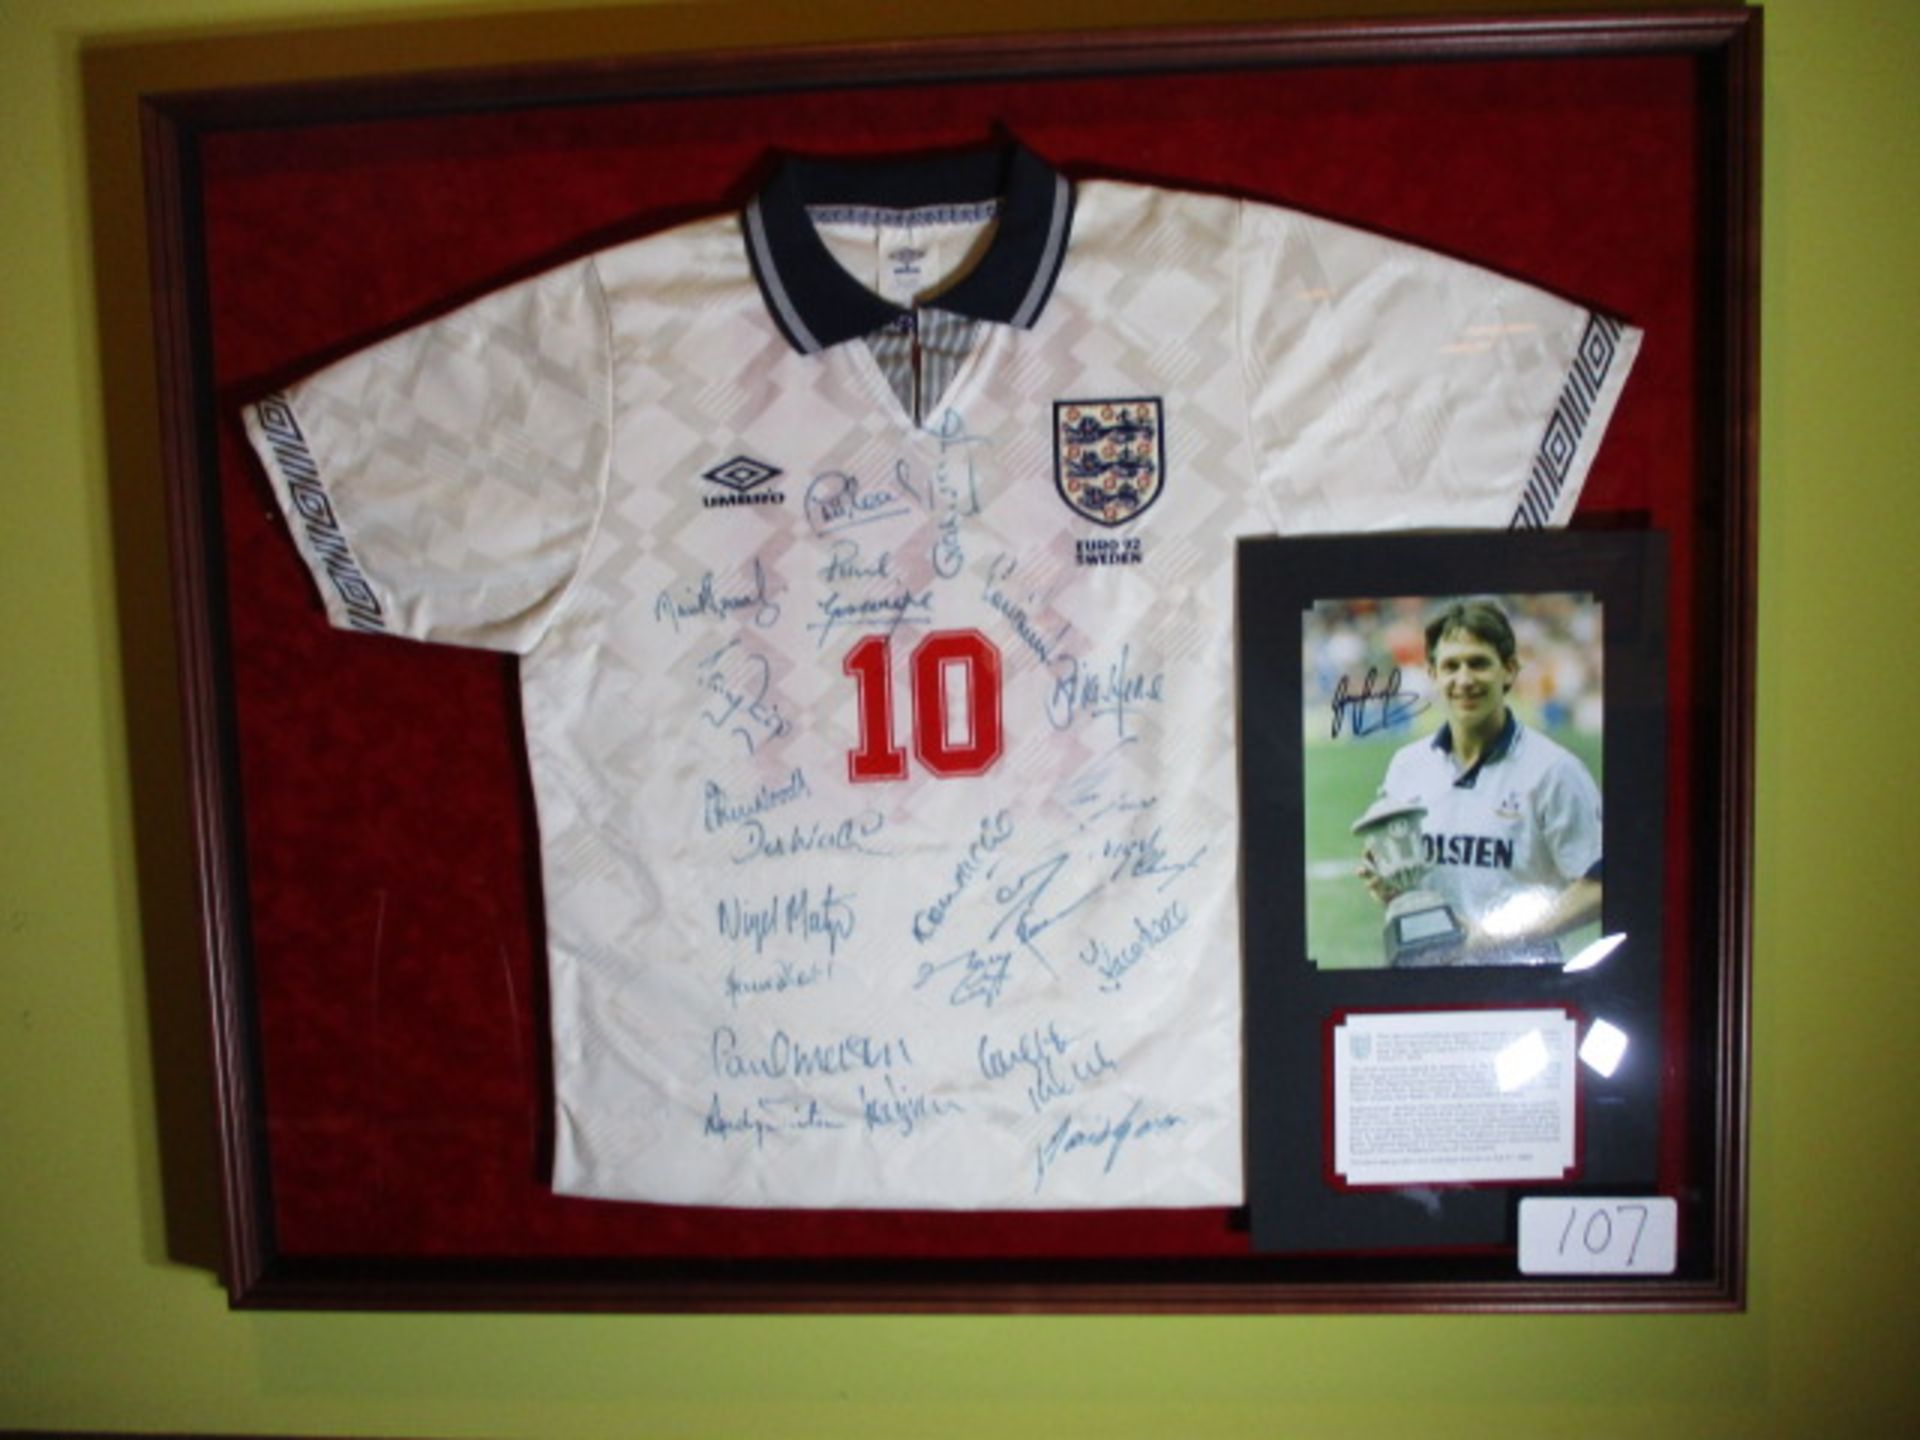 Gary Lineker’s last ever England shirt, worn by Gary Lineker in his last appearance for England,